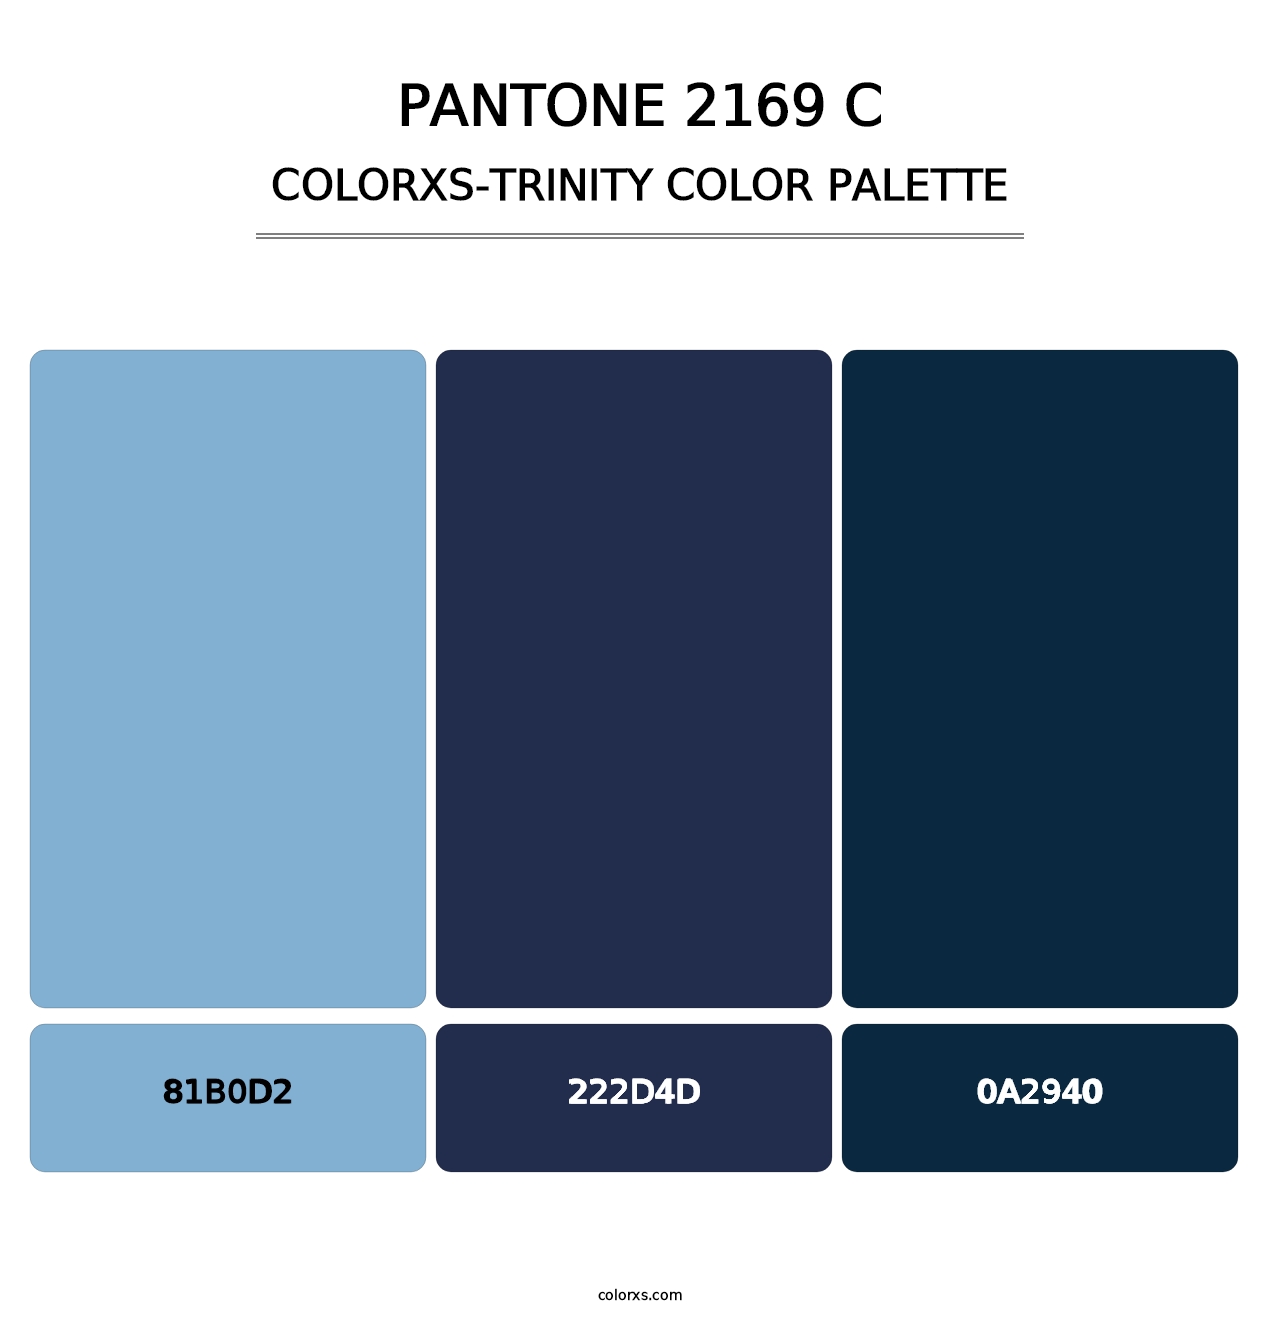 PANTONE 2169 C - Colorxs Trinity Palette